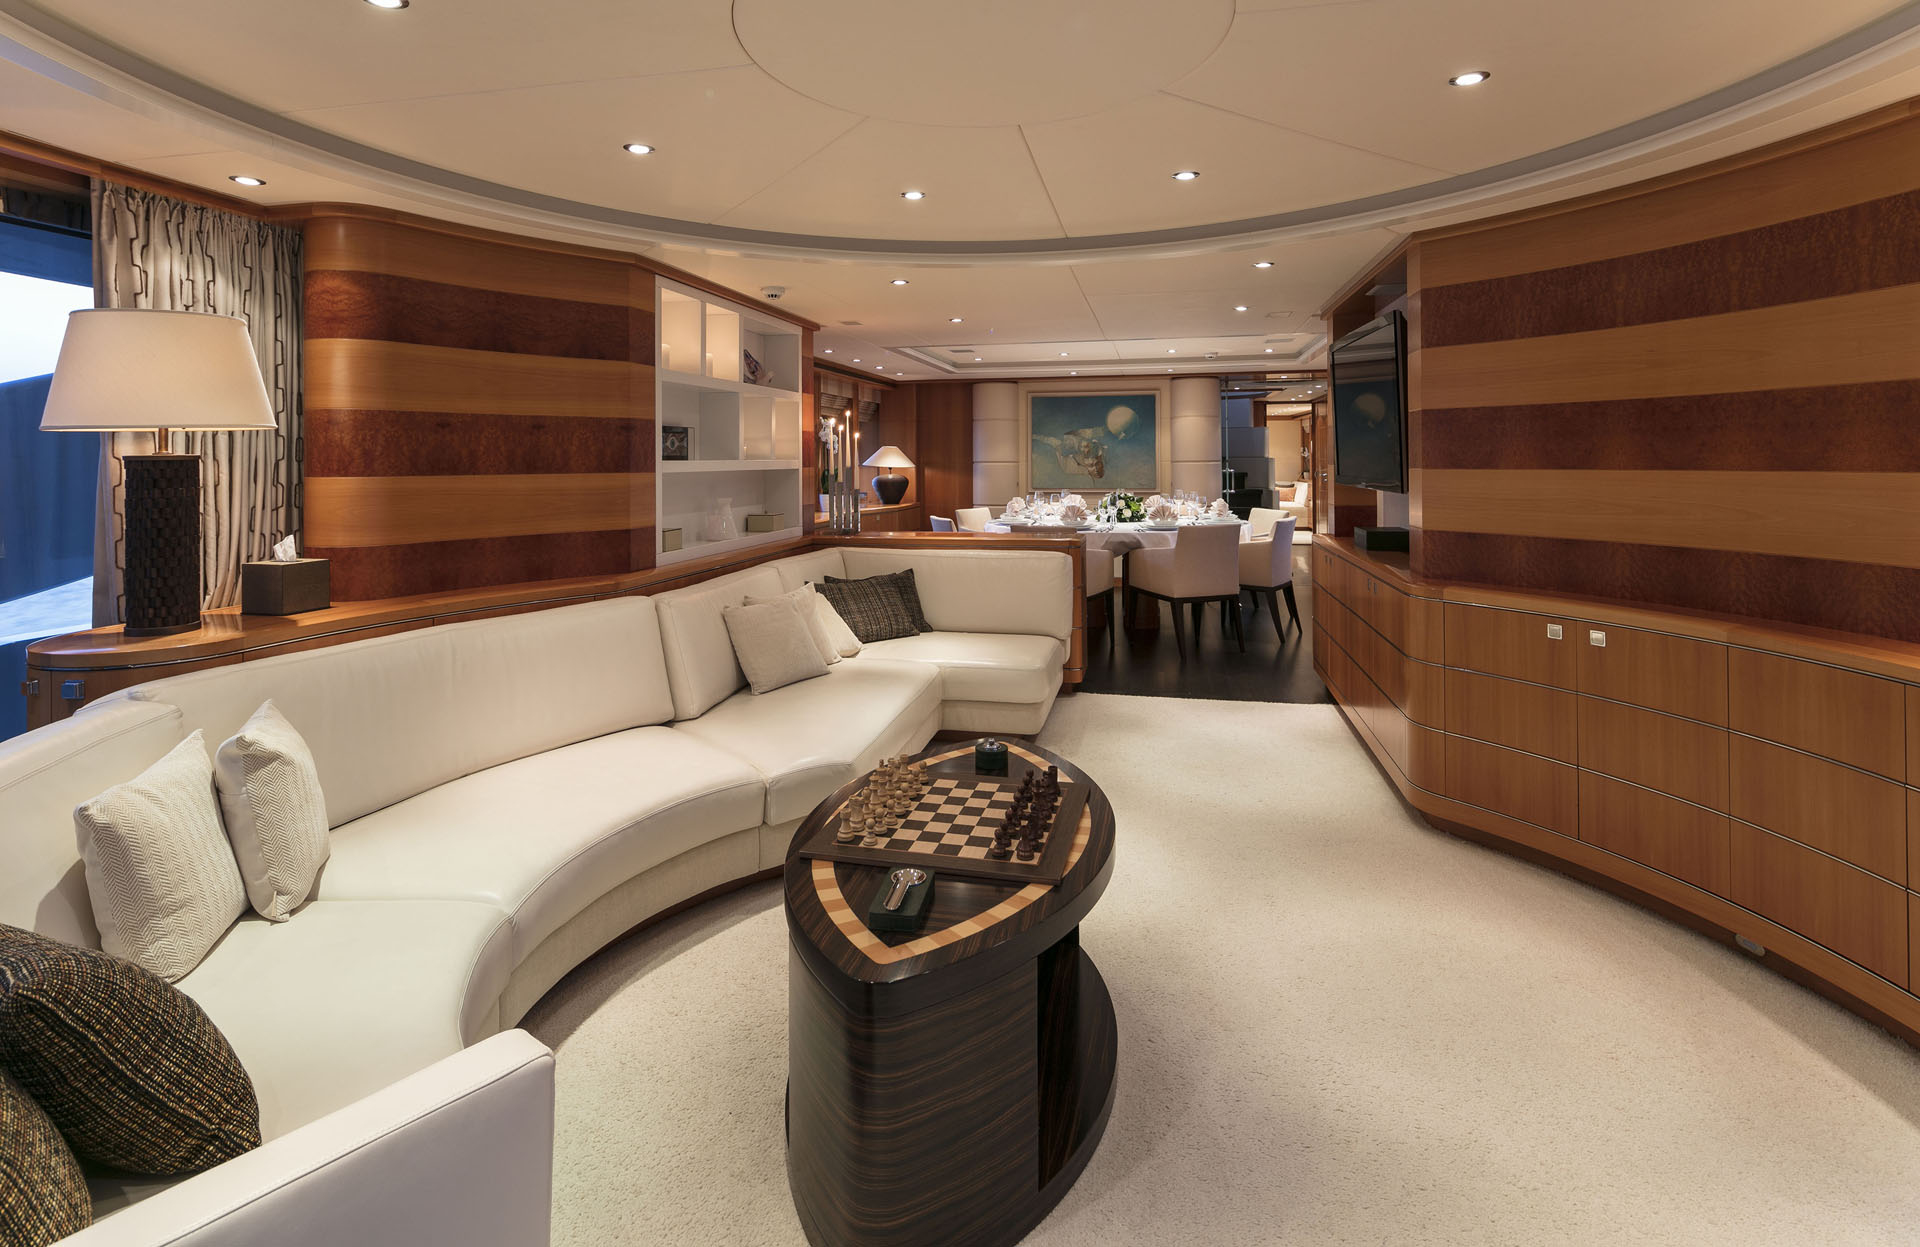 Motor yacht L'EQUINOX - Salon view forward